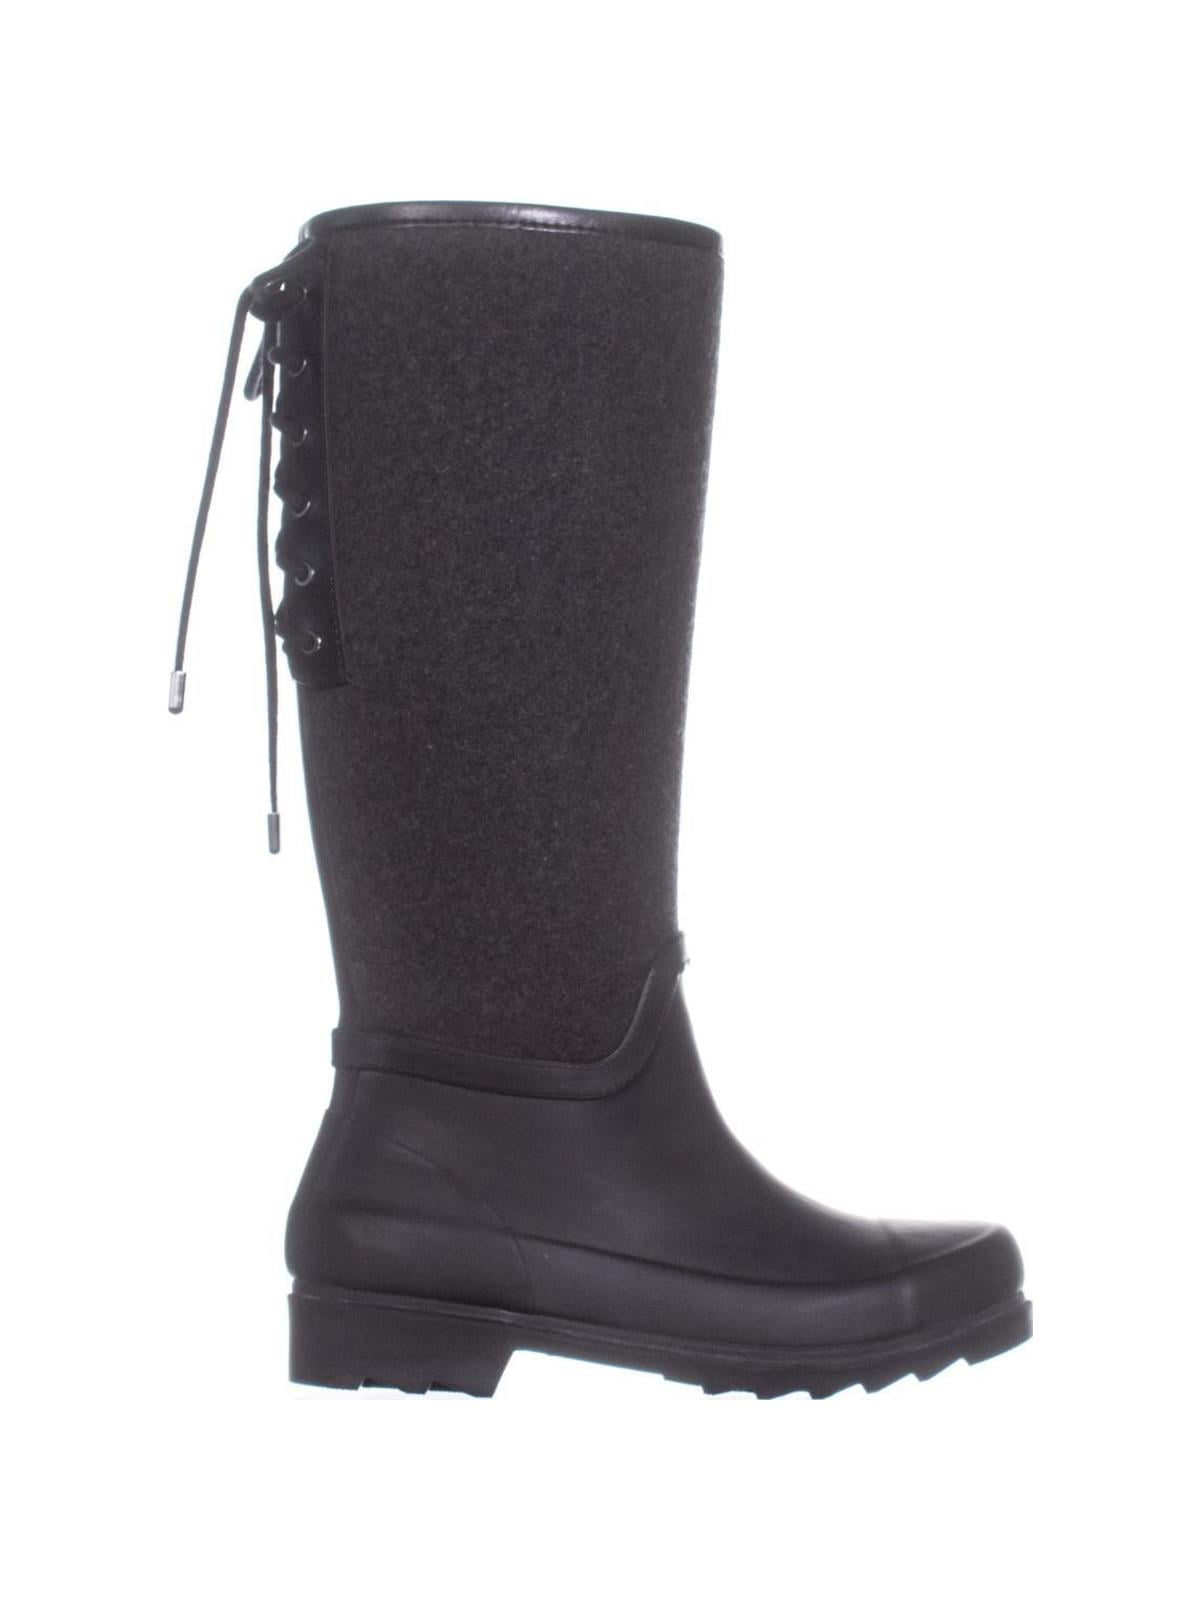 Nine West Oops Lace Up Rain Boots, Dark Grey Multi | Walmart Canada